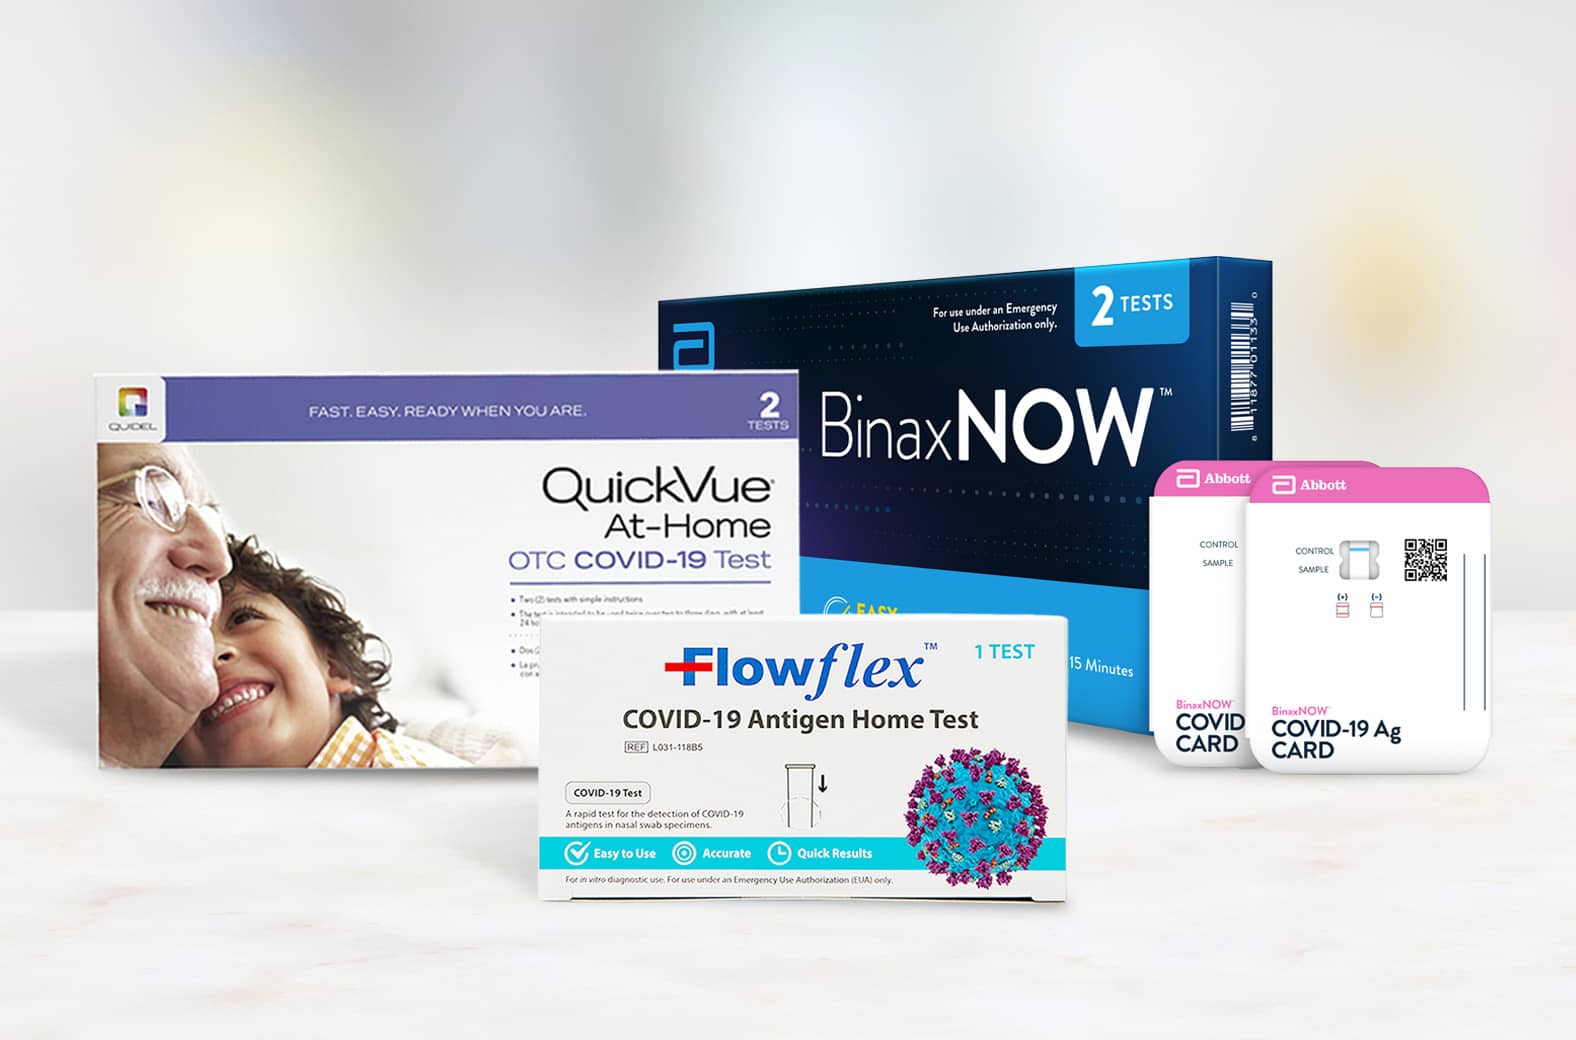 QuickVue, Flowflex, BinaxNOW at-home COVID-19 tests